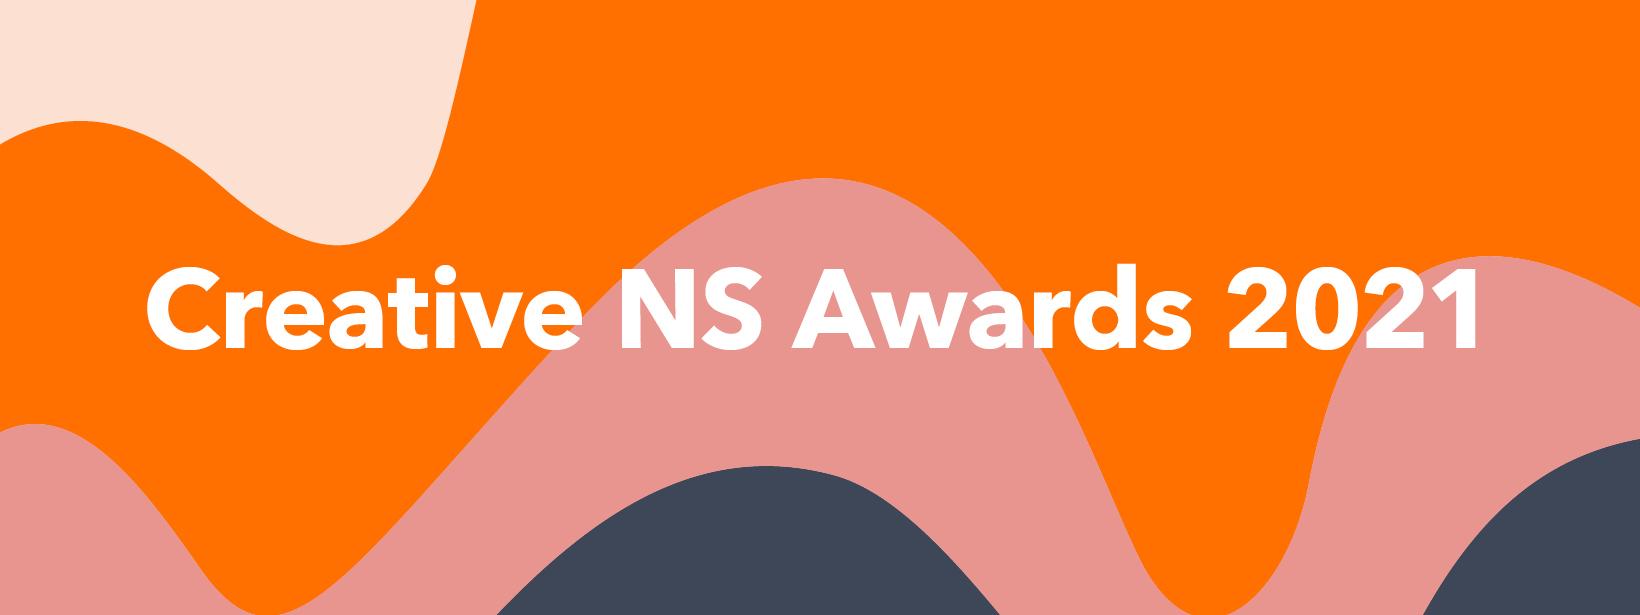 Creative NS Awards 2021